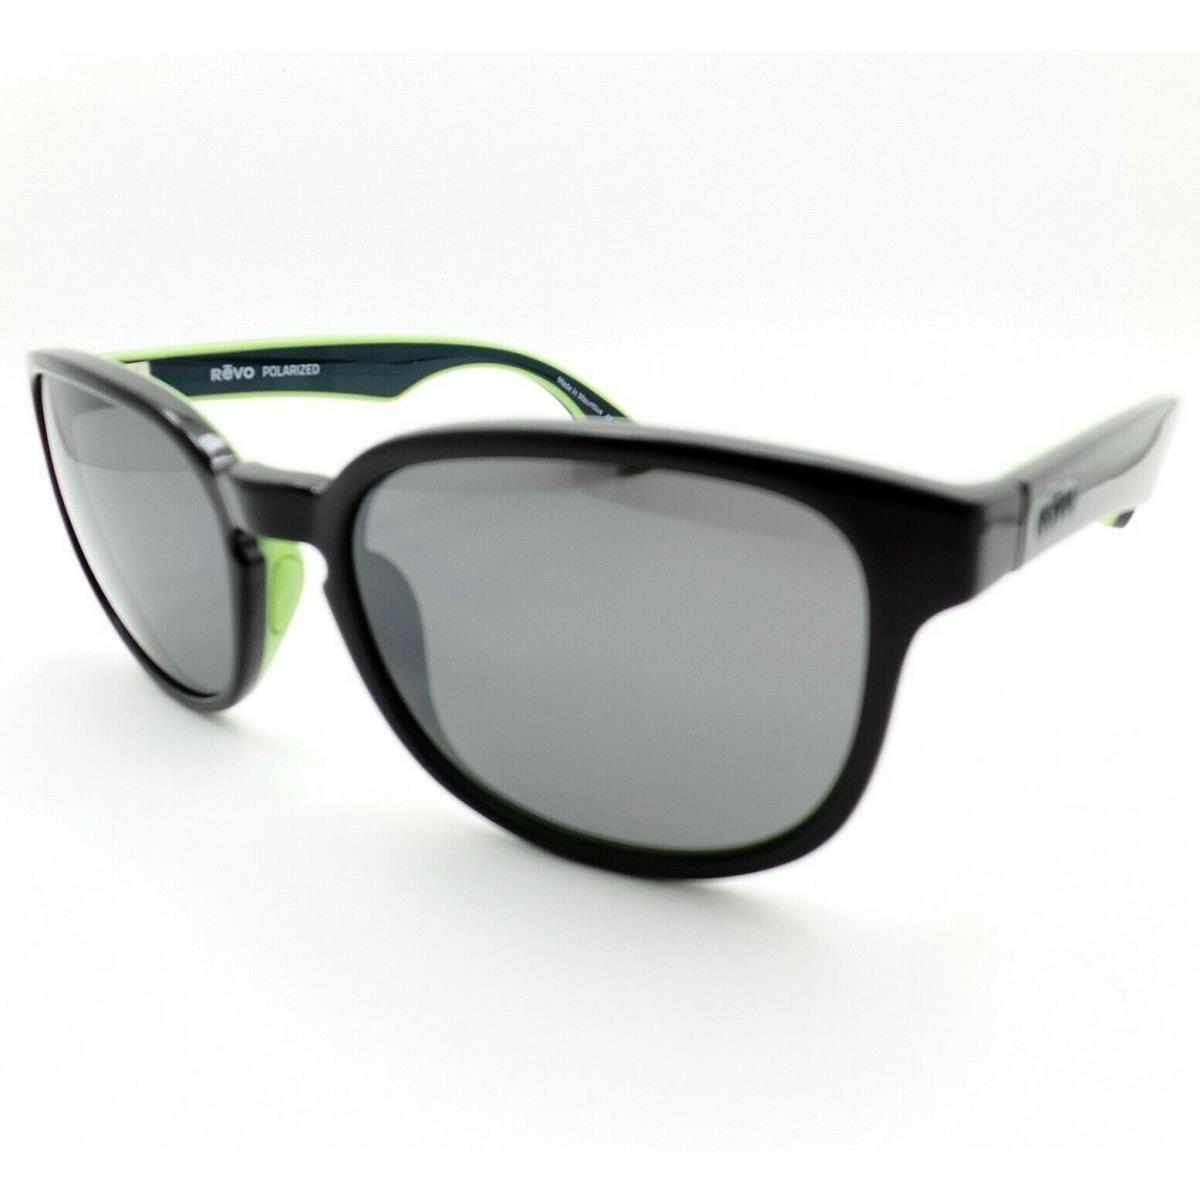 Revo Kash Black Green Blue Graphite Polarized Sunglasses - Frame: Black Green Blue, Lens: